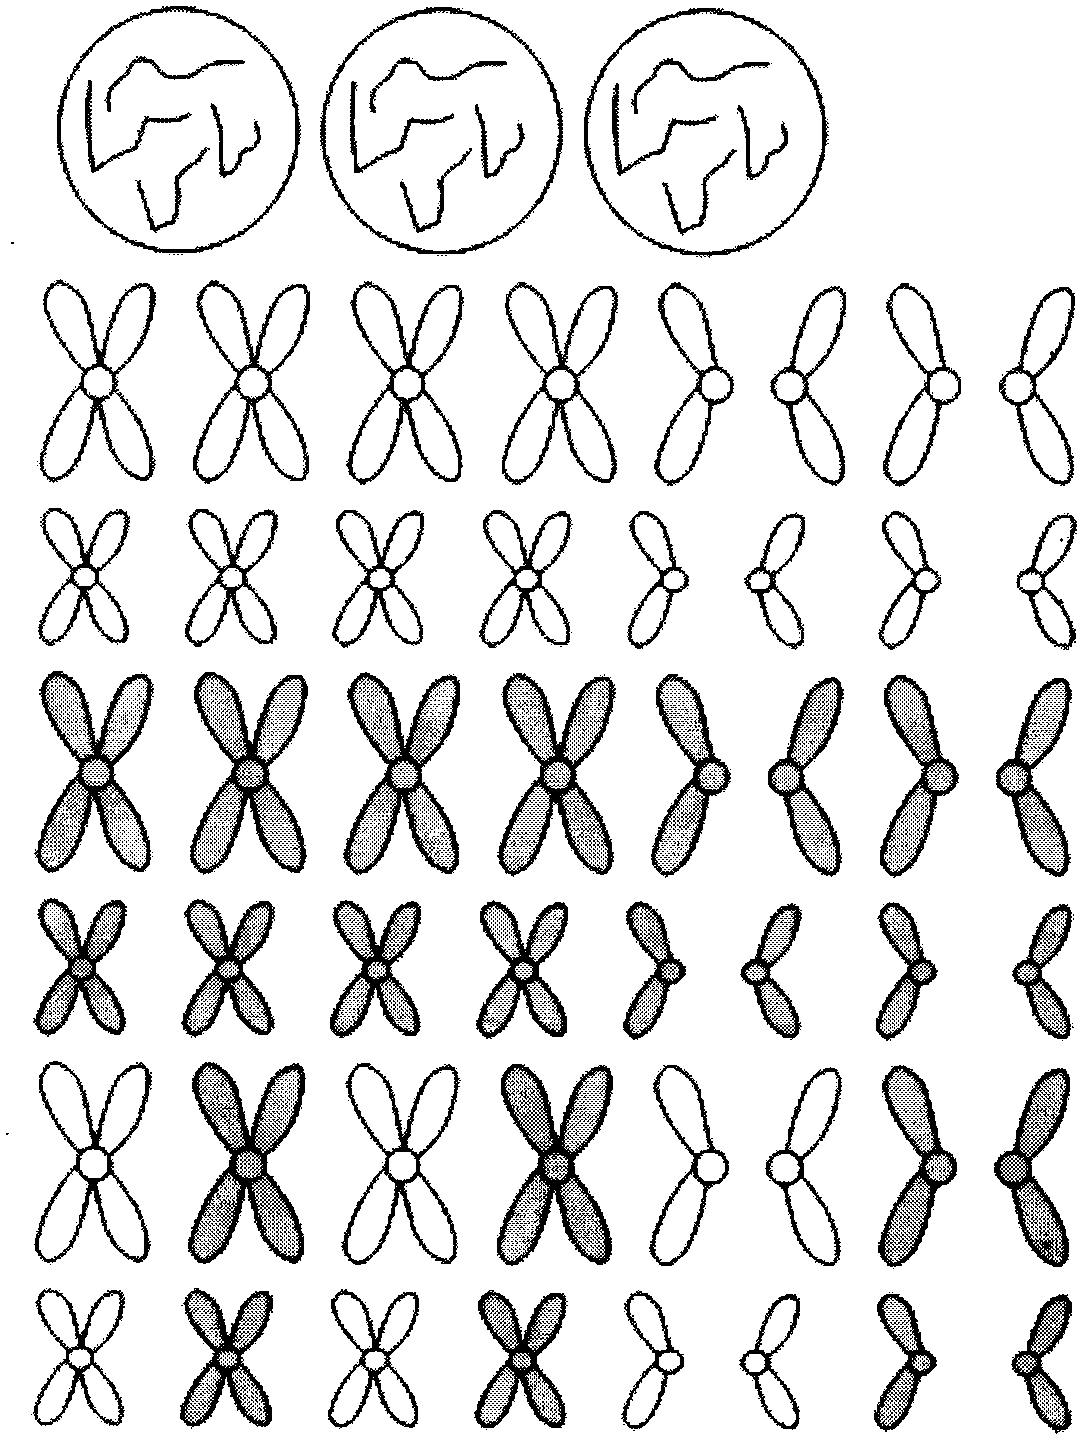 Cell division chromosome model jigsaw teaching aid